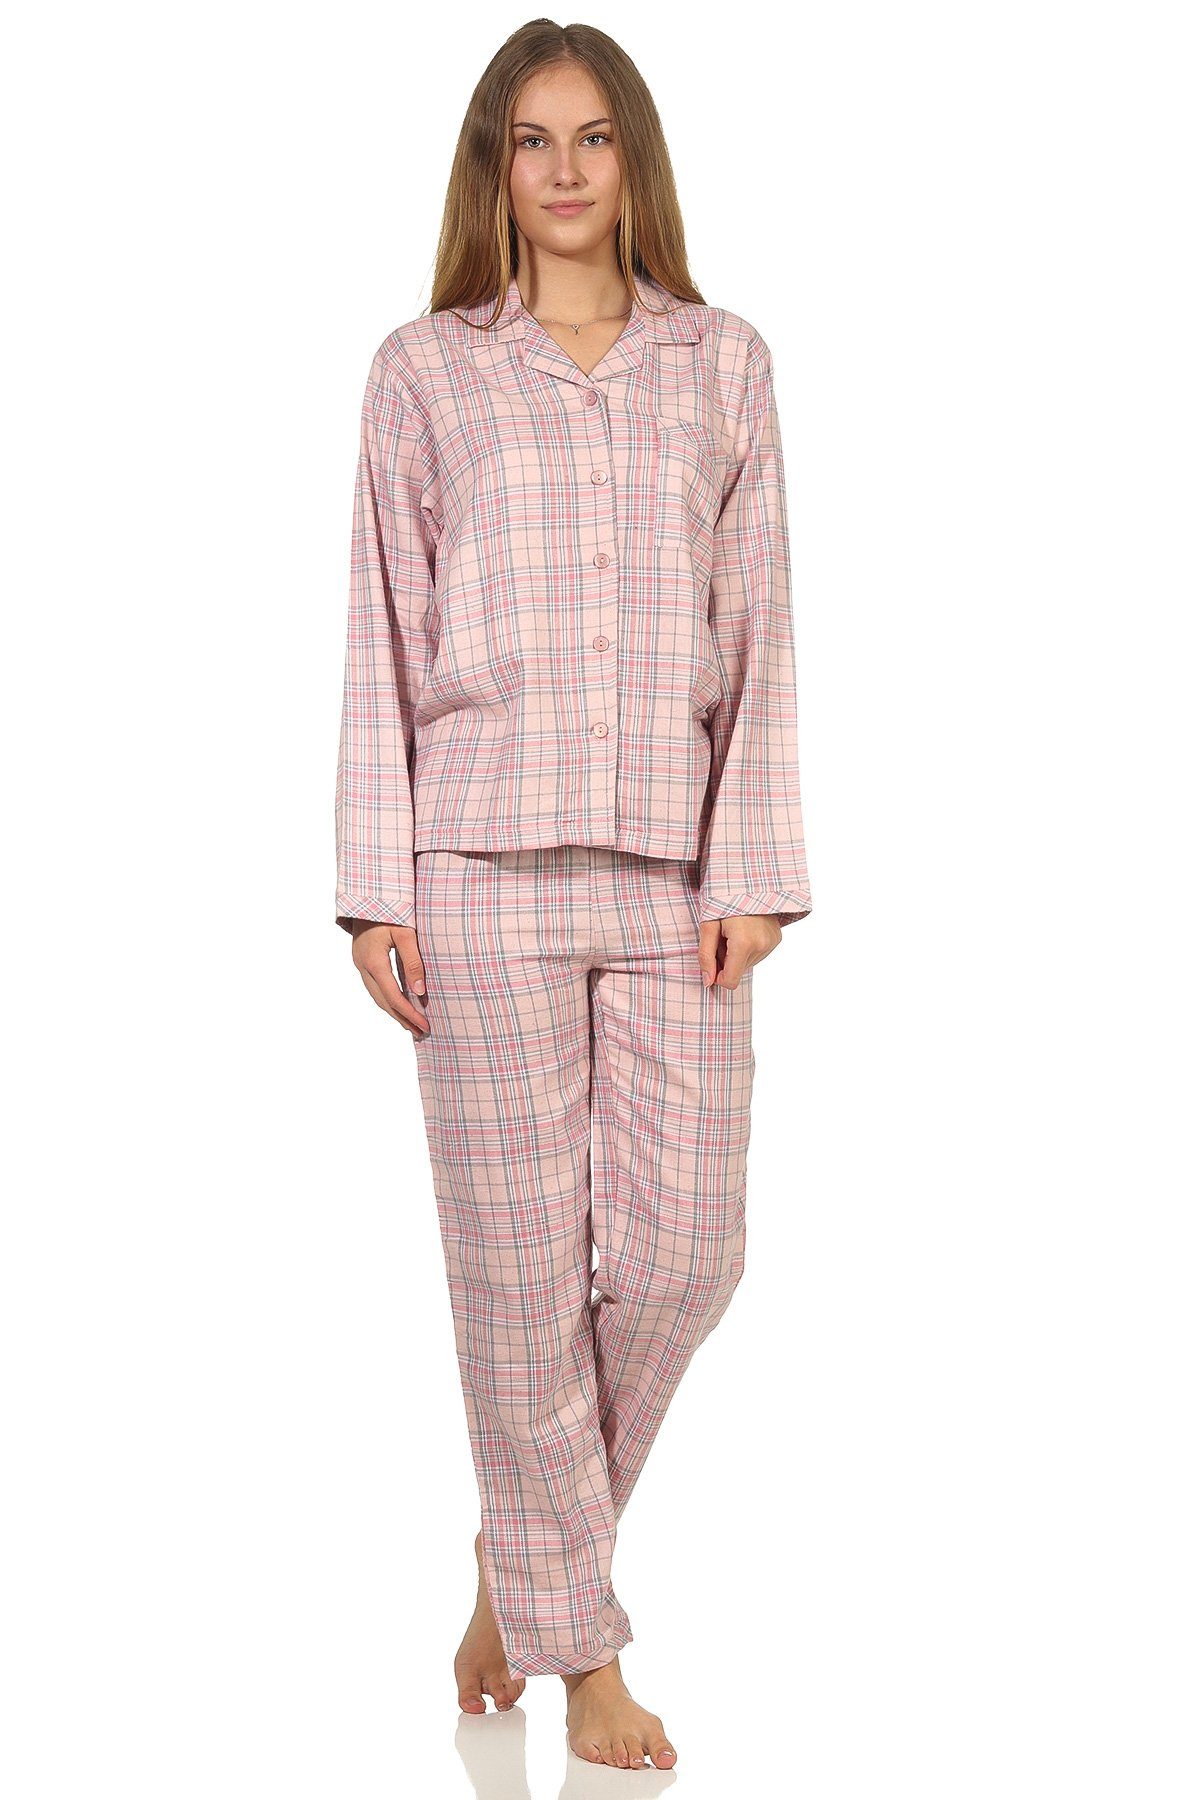 Normann Pyjama Damen langarm Flanell Schlafanzug kariert - 202 15 602 rosa